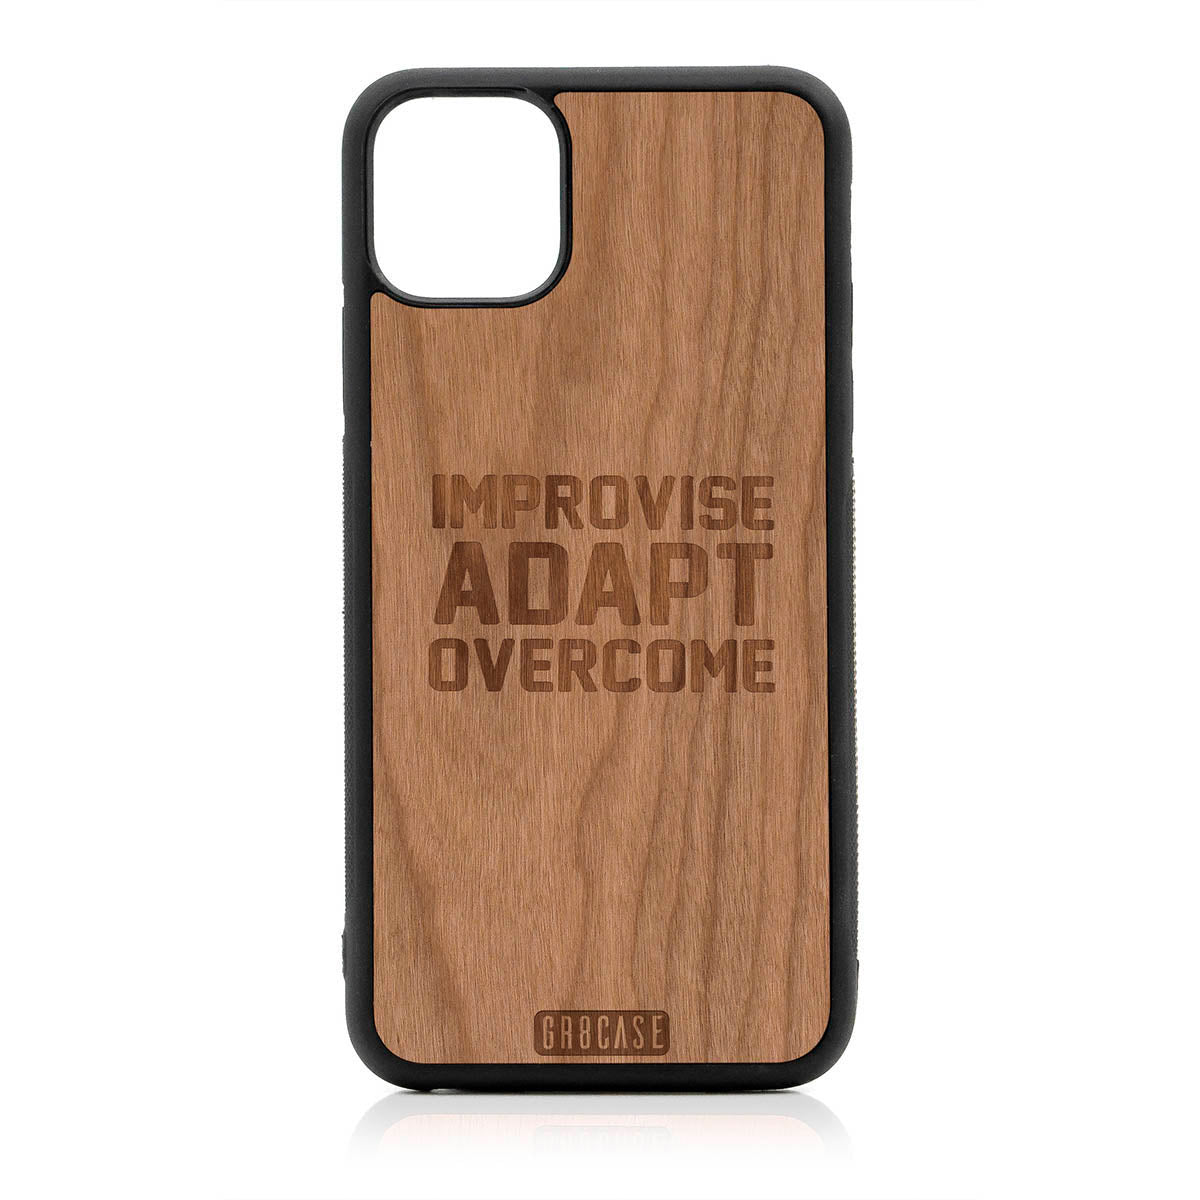 Improvise Adapt Overcome Design Wood Case For iPhone 11 Pro Max